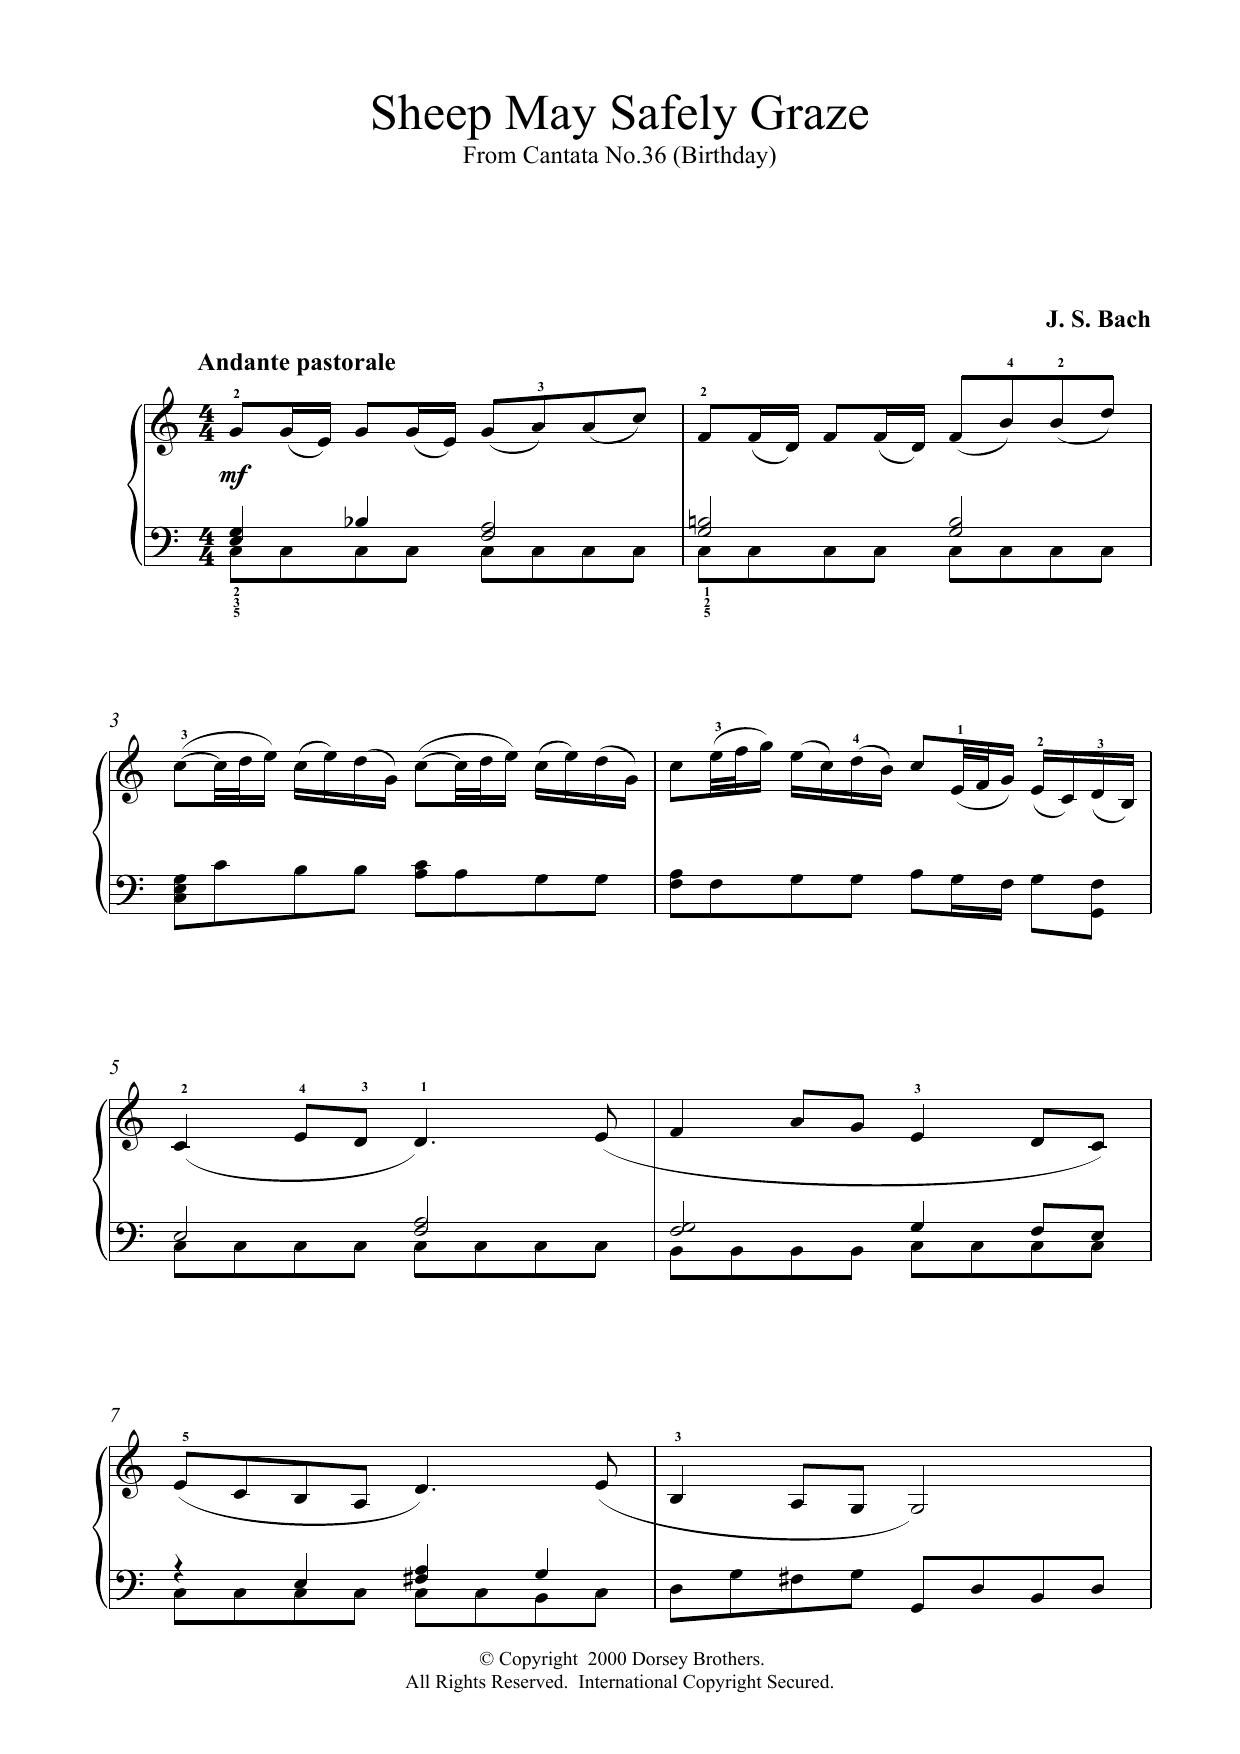 Johann Sebastian Bach Sheep May Safely Graze Sheet Music Notes & Chords for Trombone - Download or Print PDF